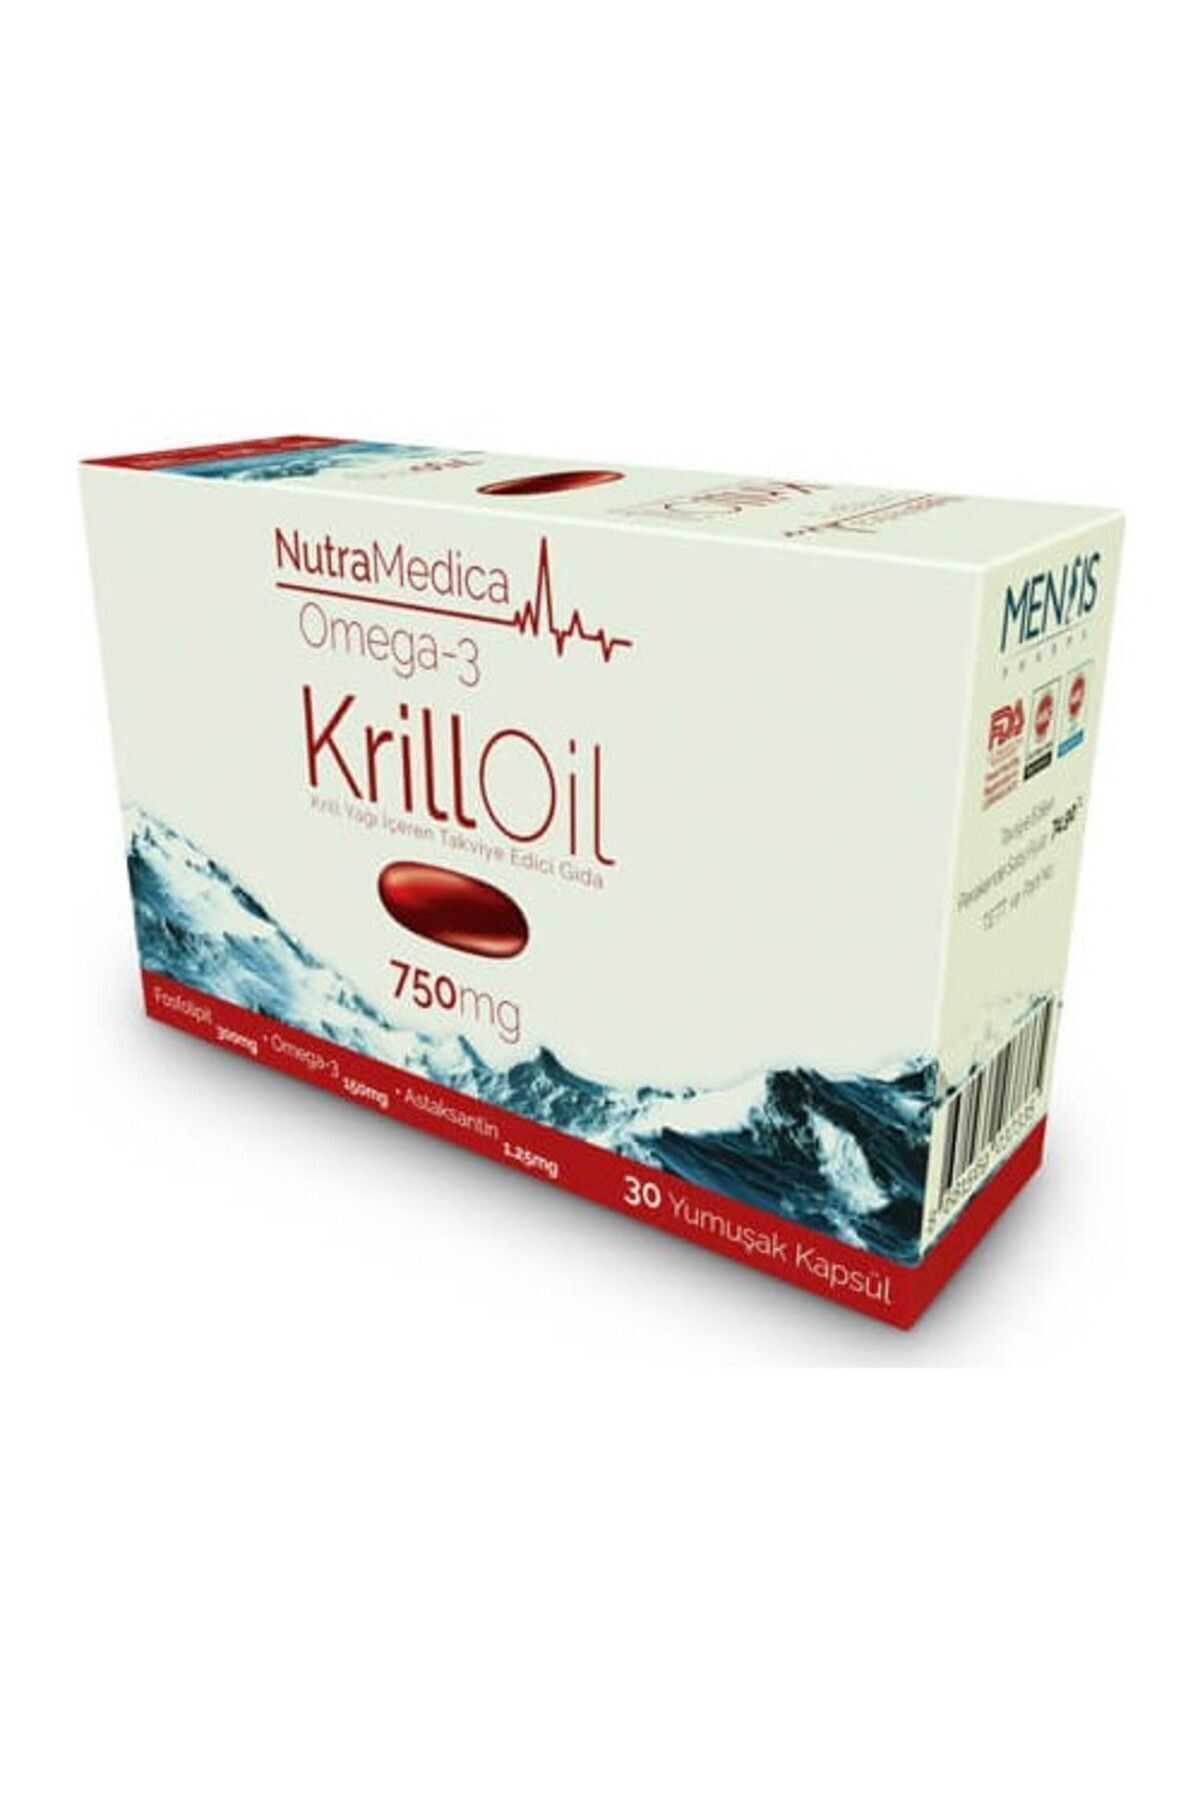 Mensis Pharma Nutramedica Krill Oil Omega 3 750 Mg 30 Kapsül